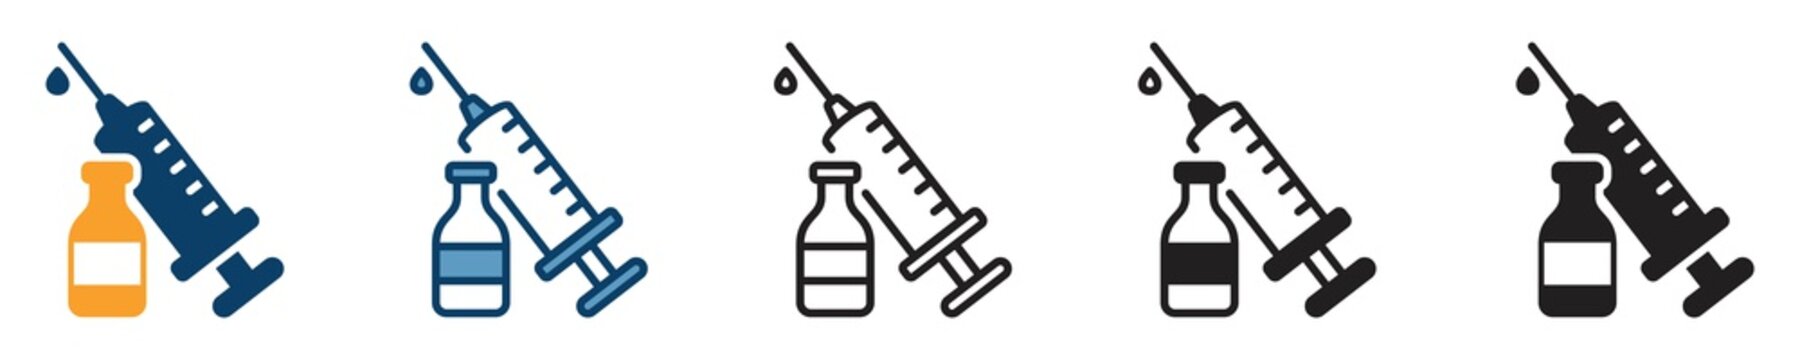 vaccine icon set, vaccine icon in different style, vector illustration